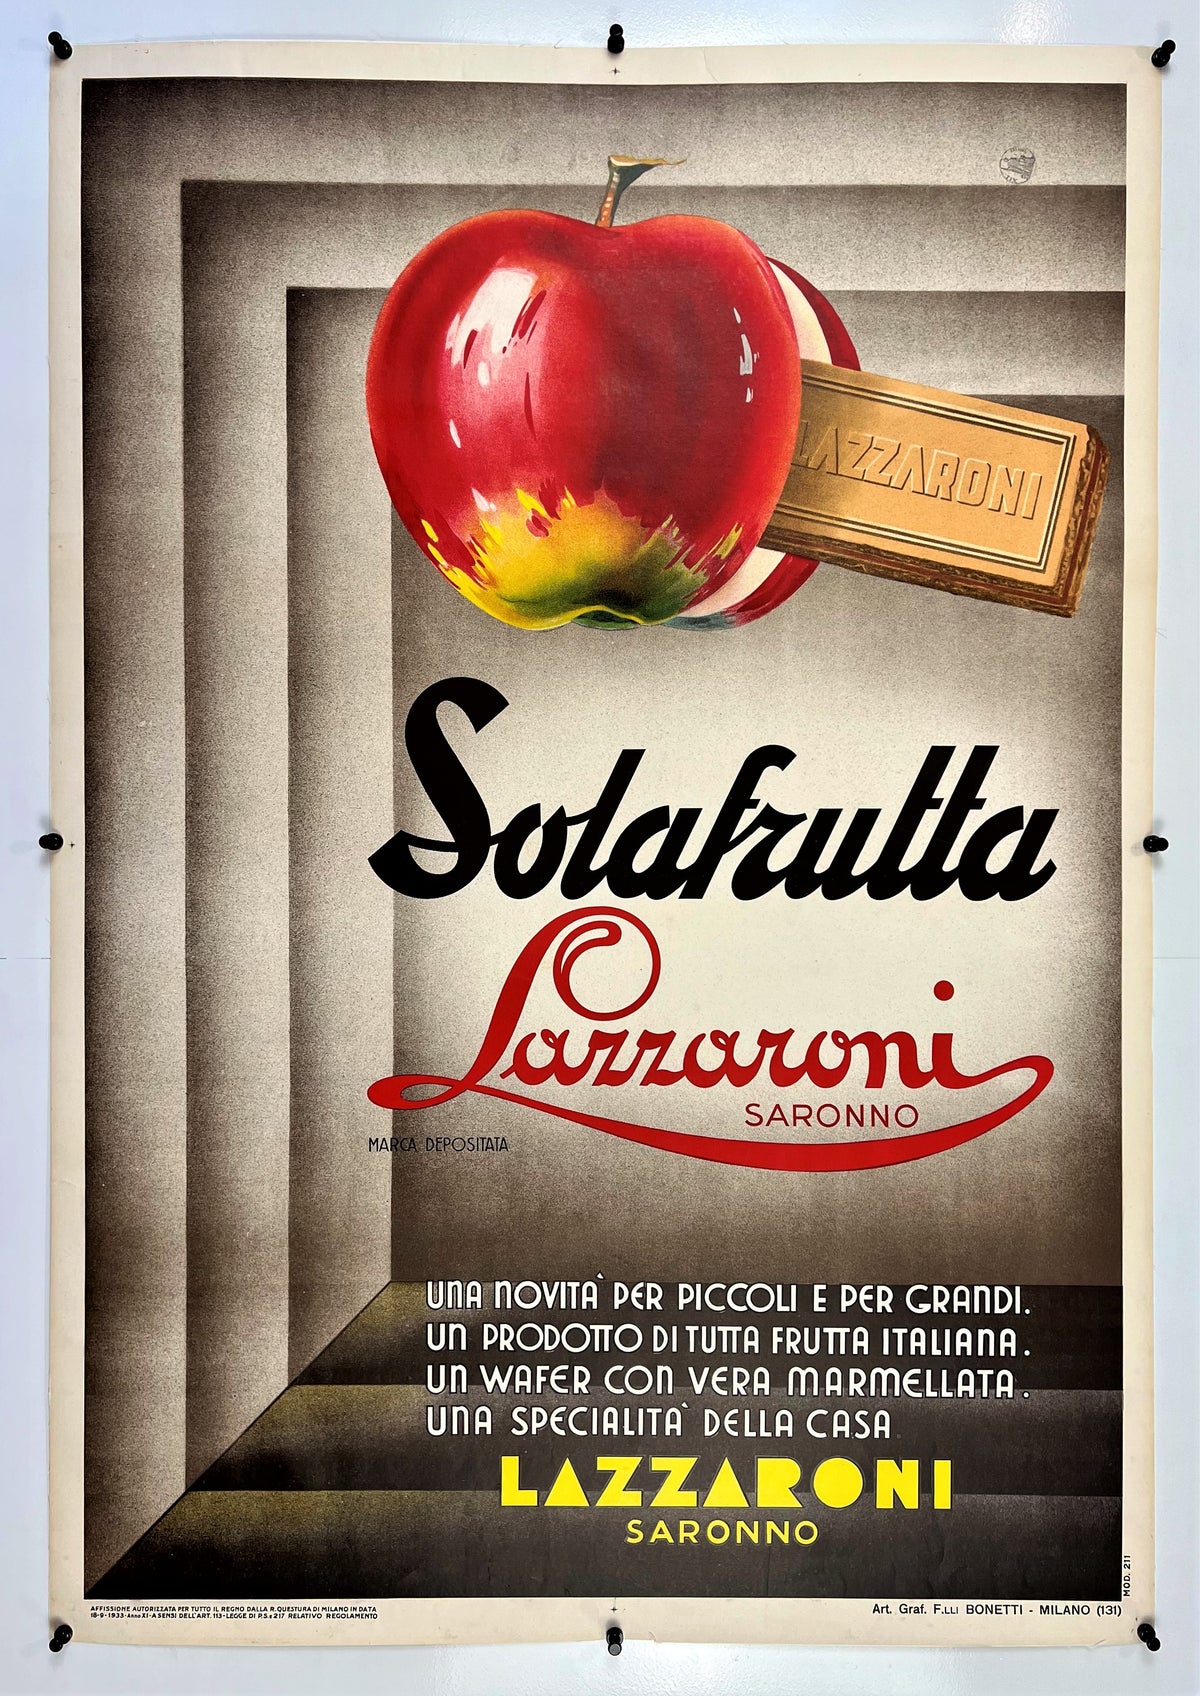 Lazzaroni Chocolate - Authentic Vintage Poster